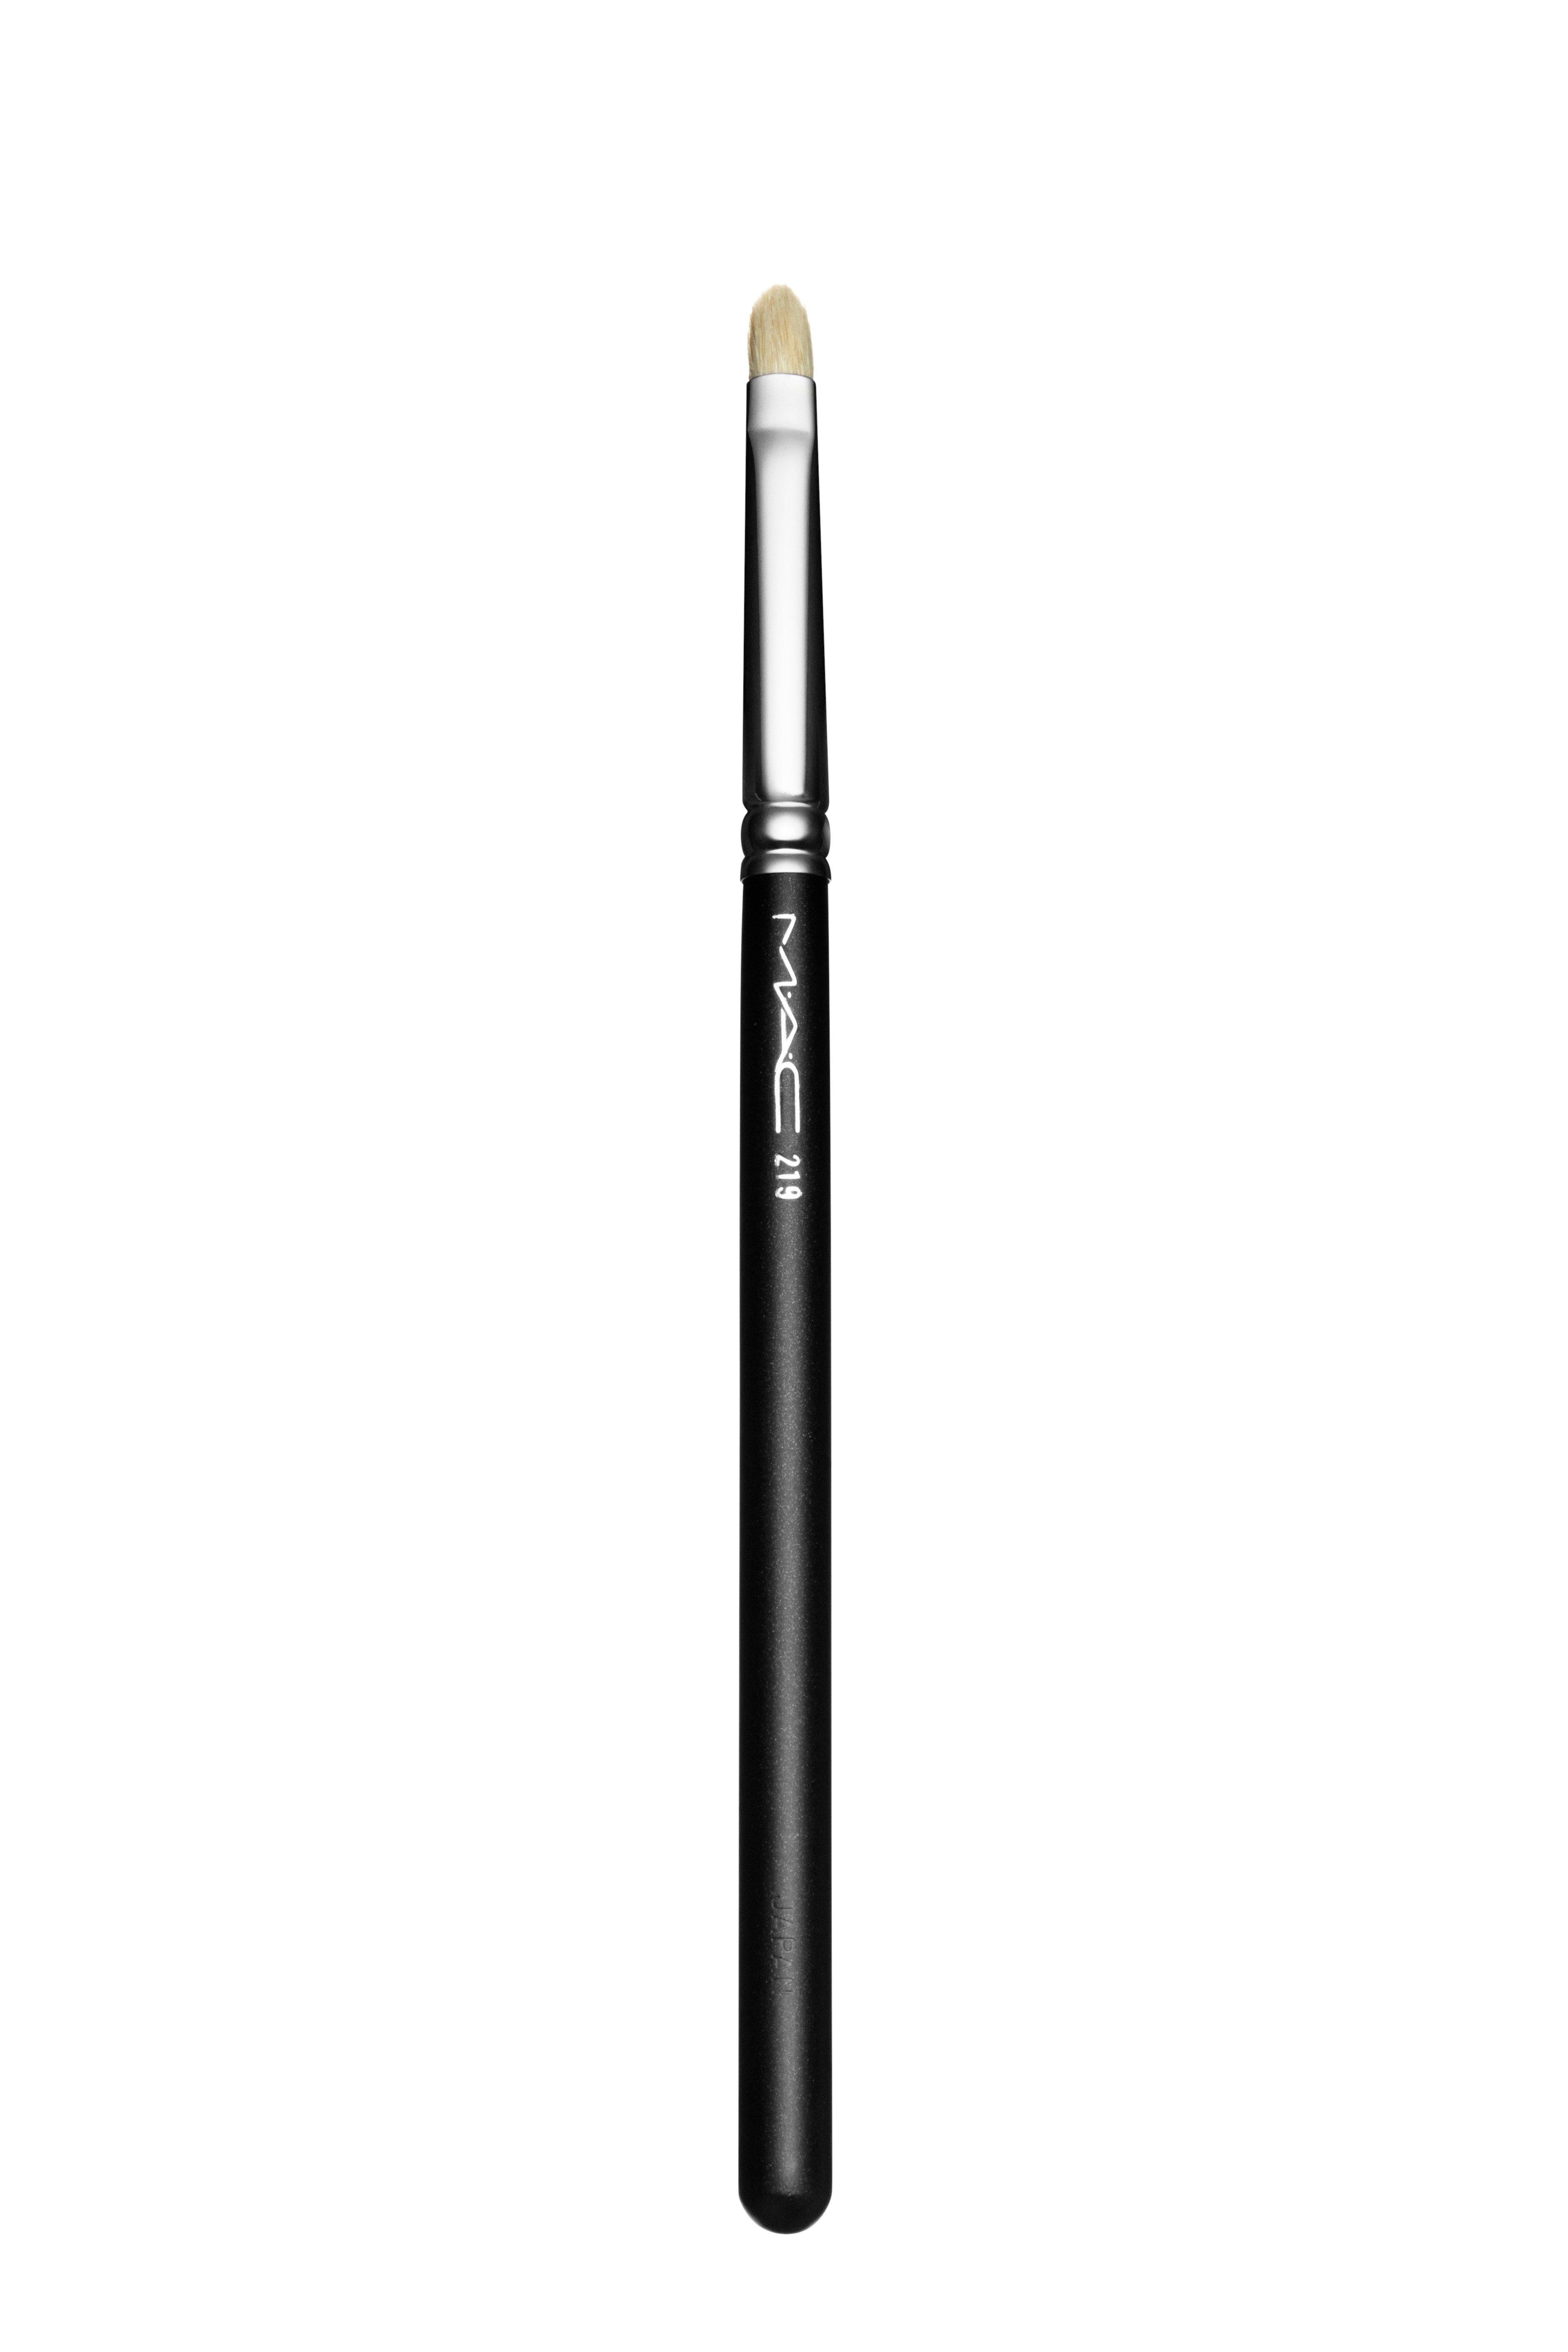 Image of MAC Cosmetics Pencil Brush 219